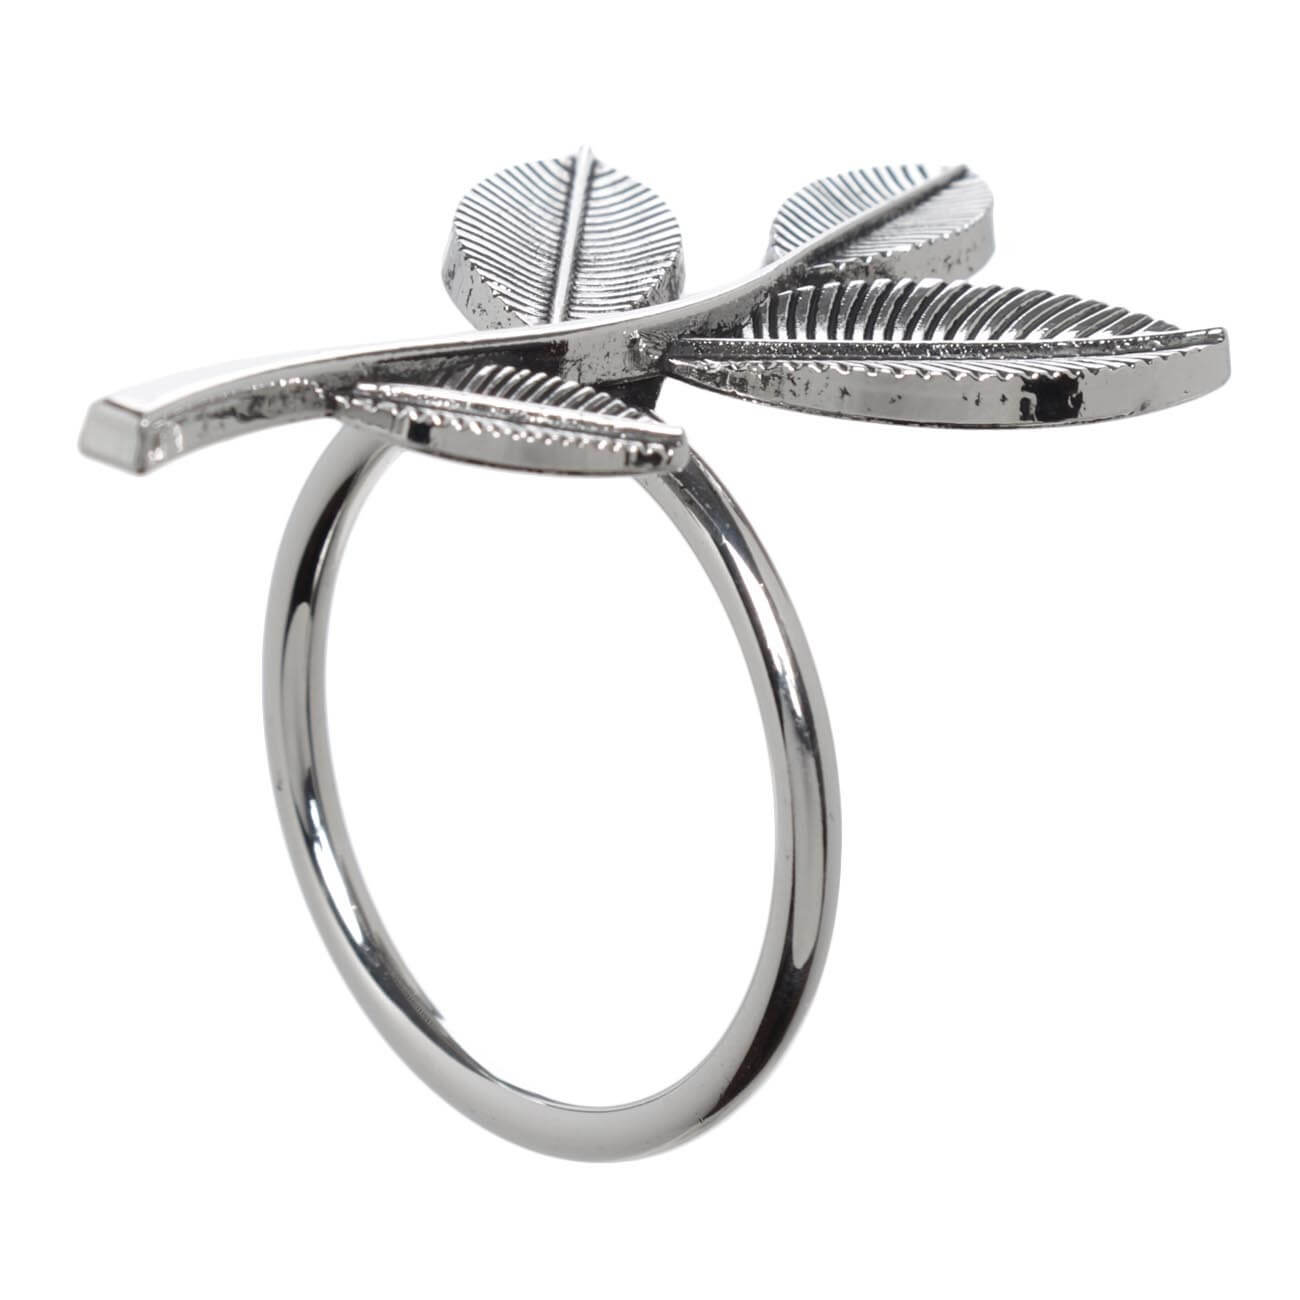 kuchenland кольцо для салфеток 5 см 2 шт металл серебристое кольцо fantastic r Кольцо для салфеток, 6 см, металл, серебристое, Ветка с листьями, Print